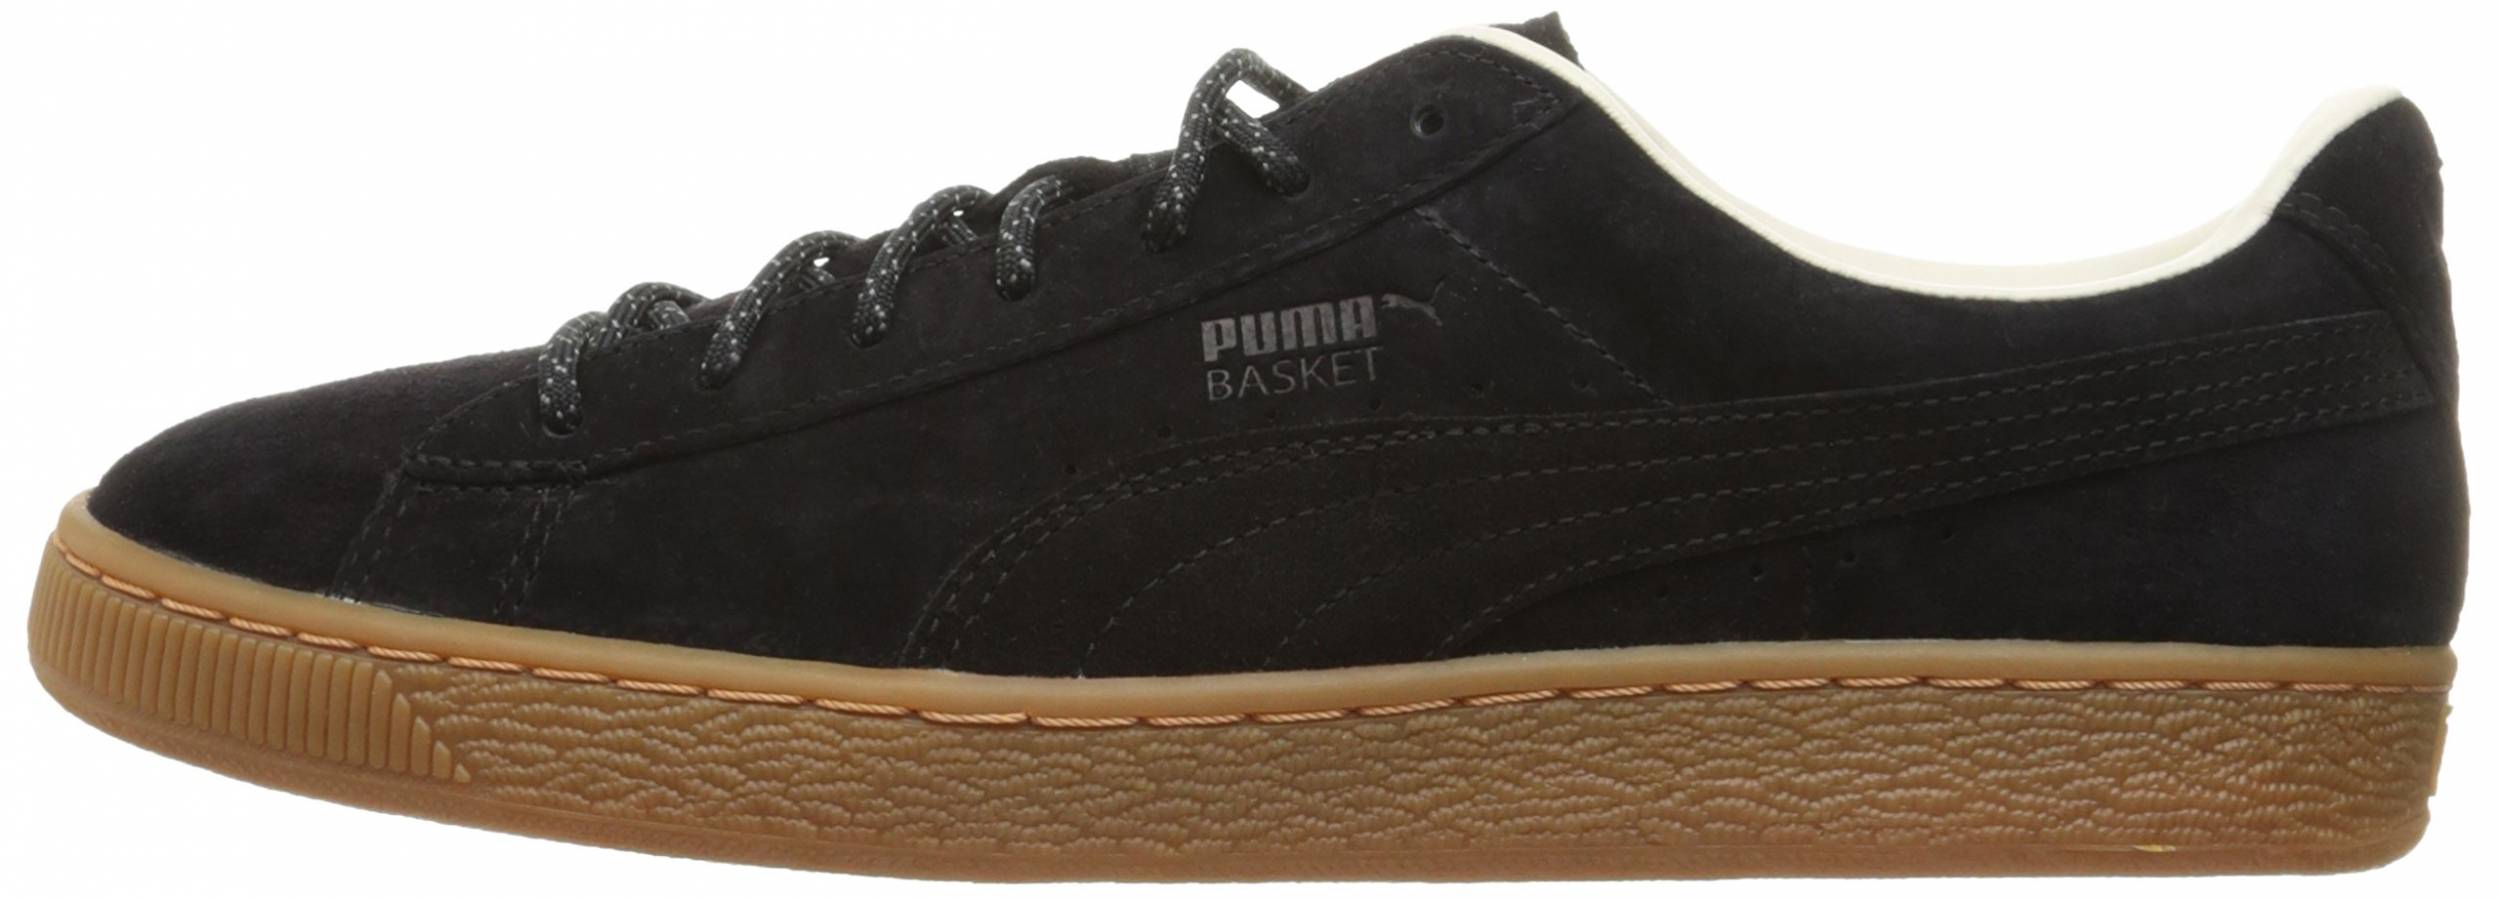 puma basket leather